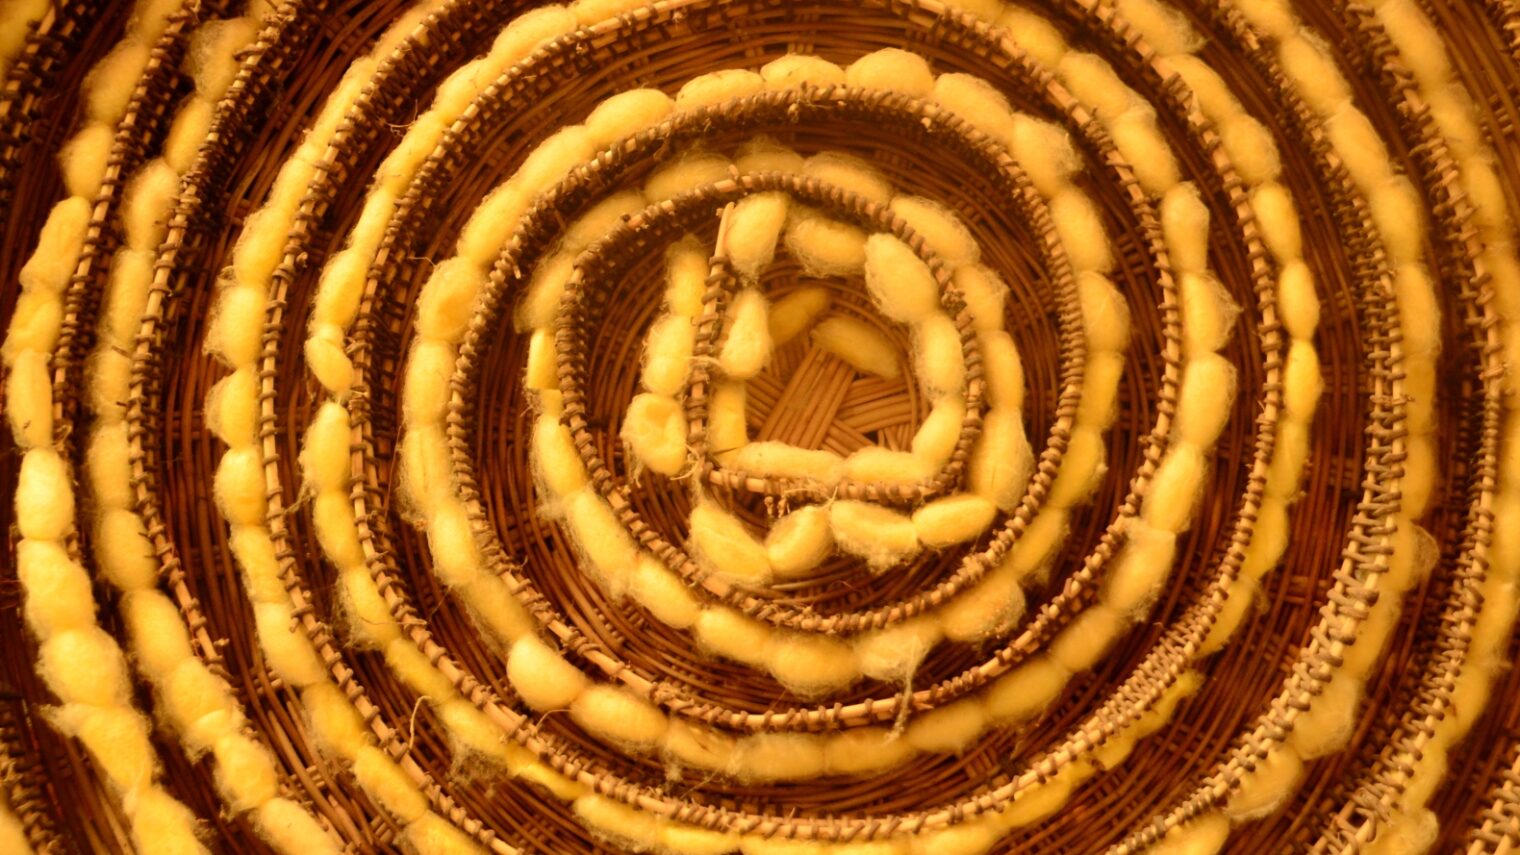 Image of silkworm cocoons via Shutterstock.com